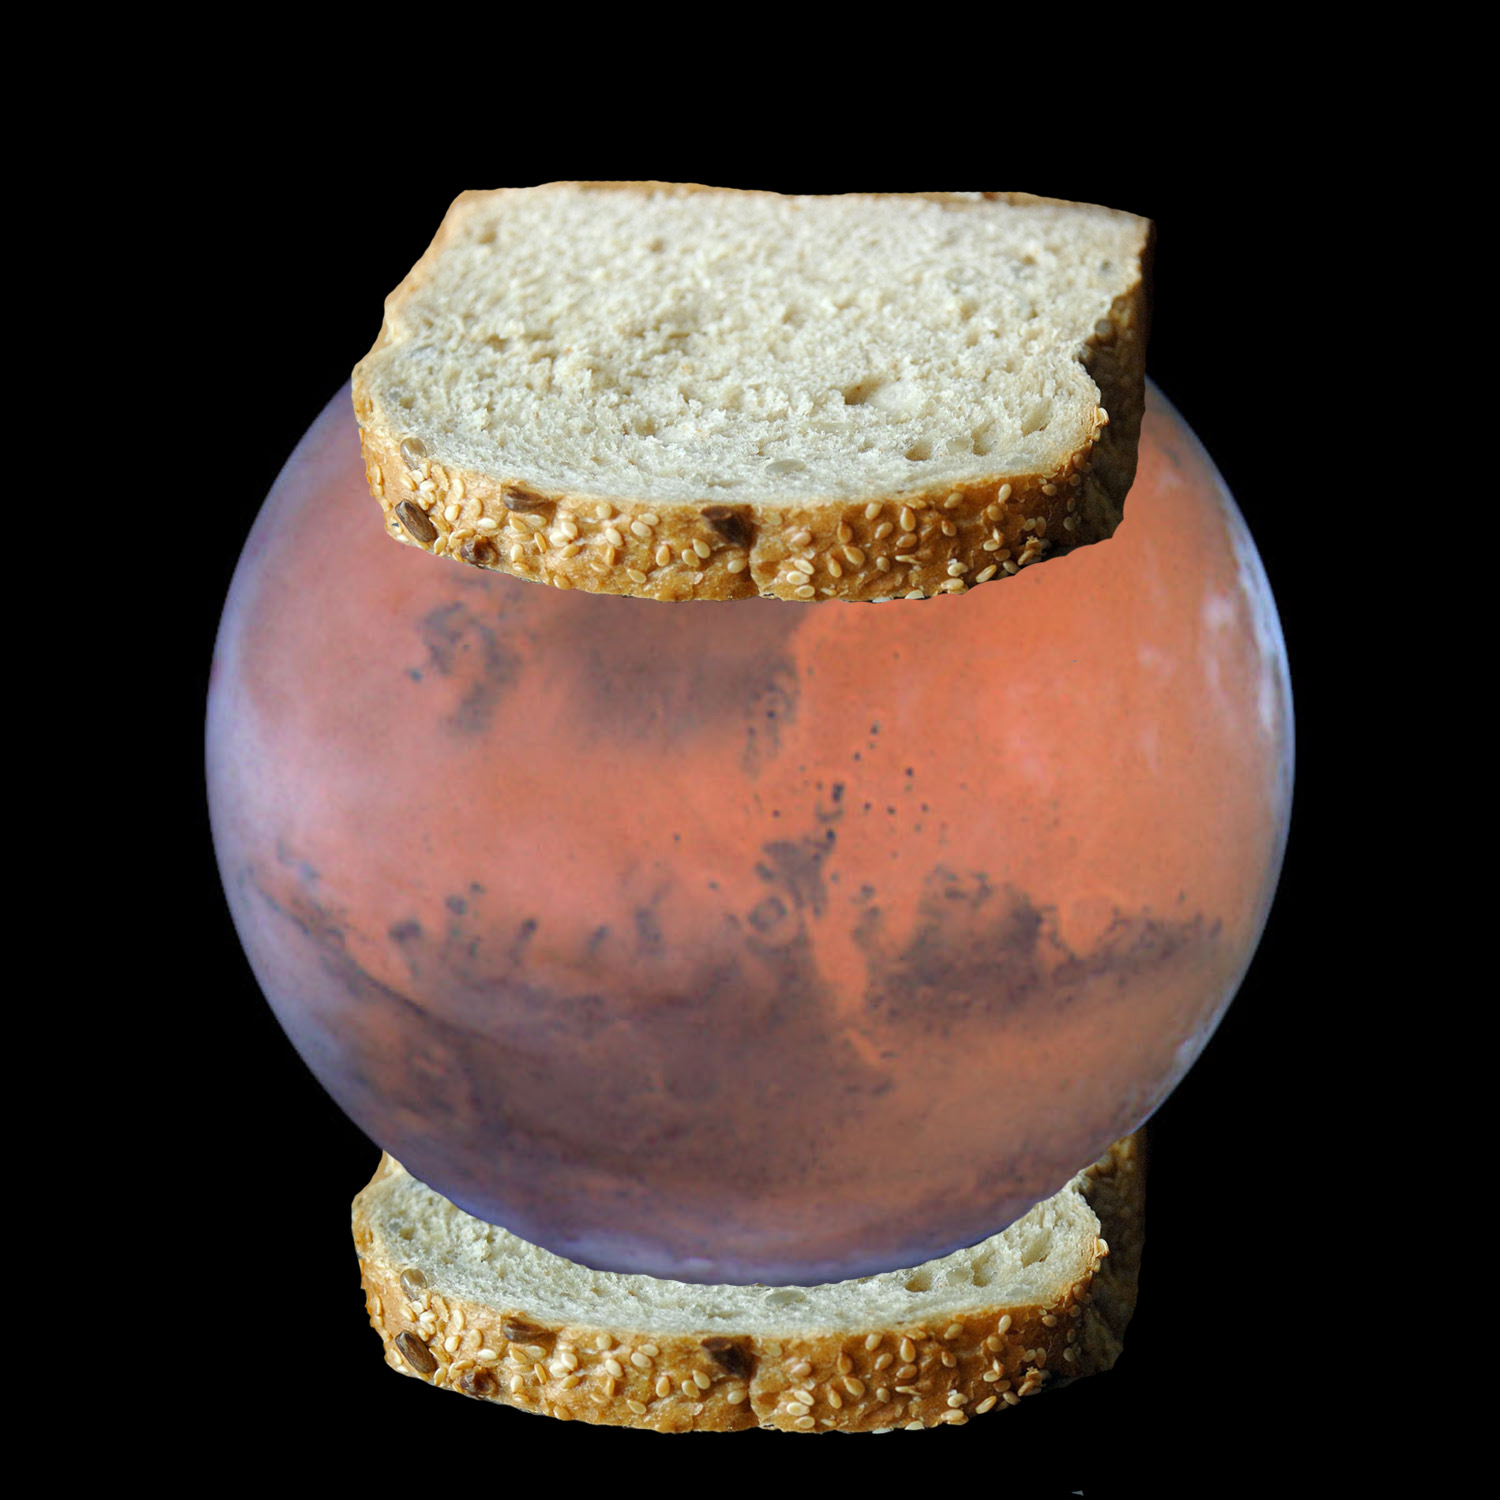 A Mars sandwich